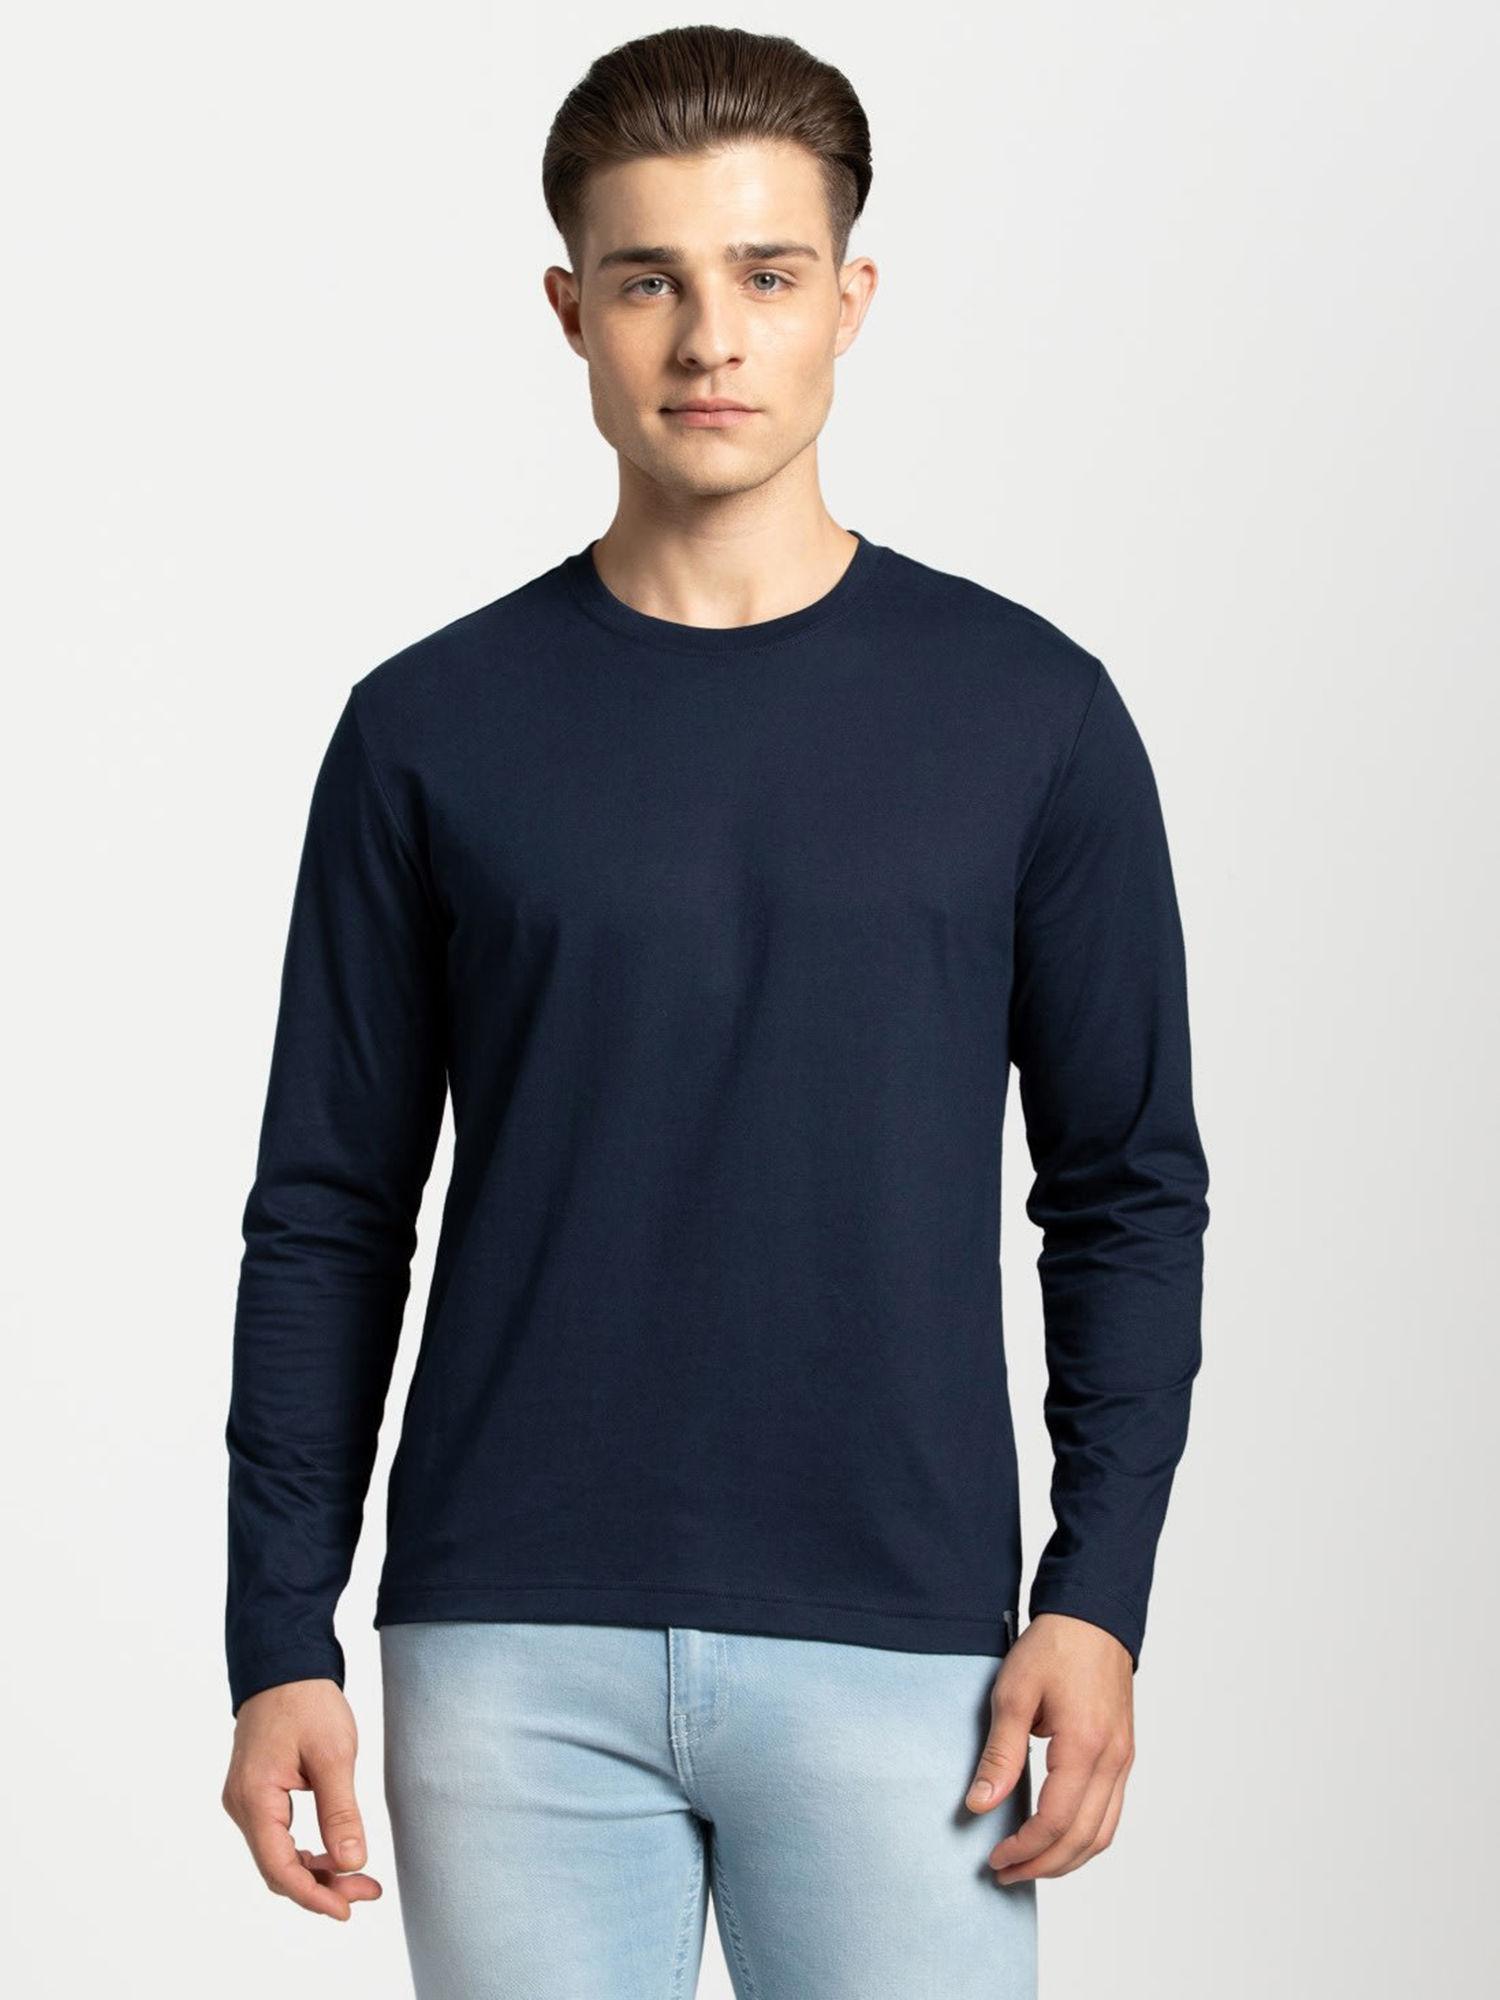 navy blue long sleeve t-shirt